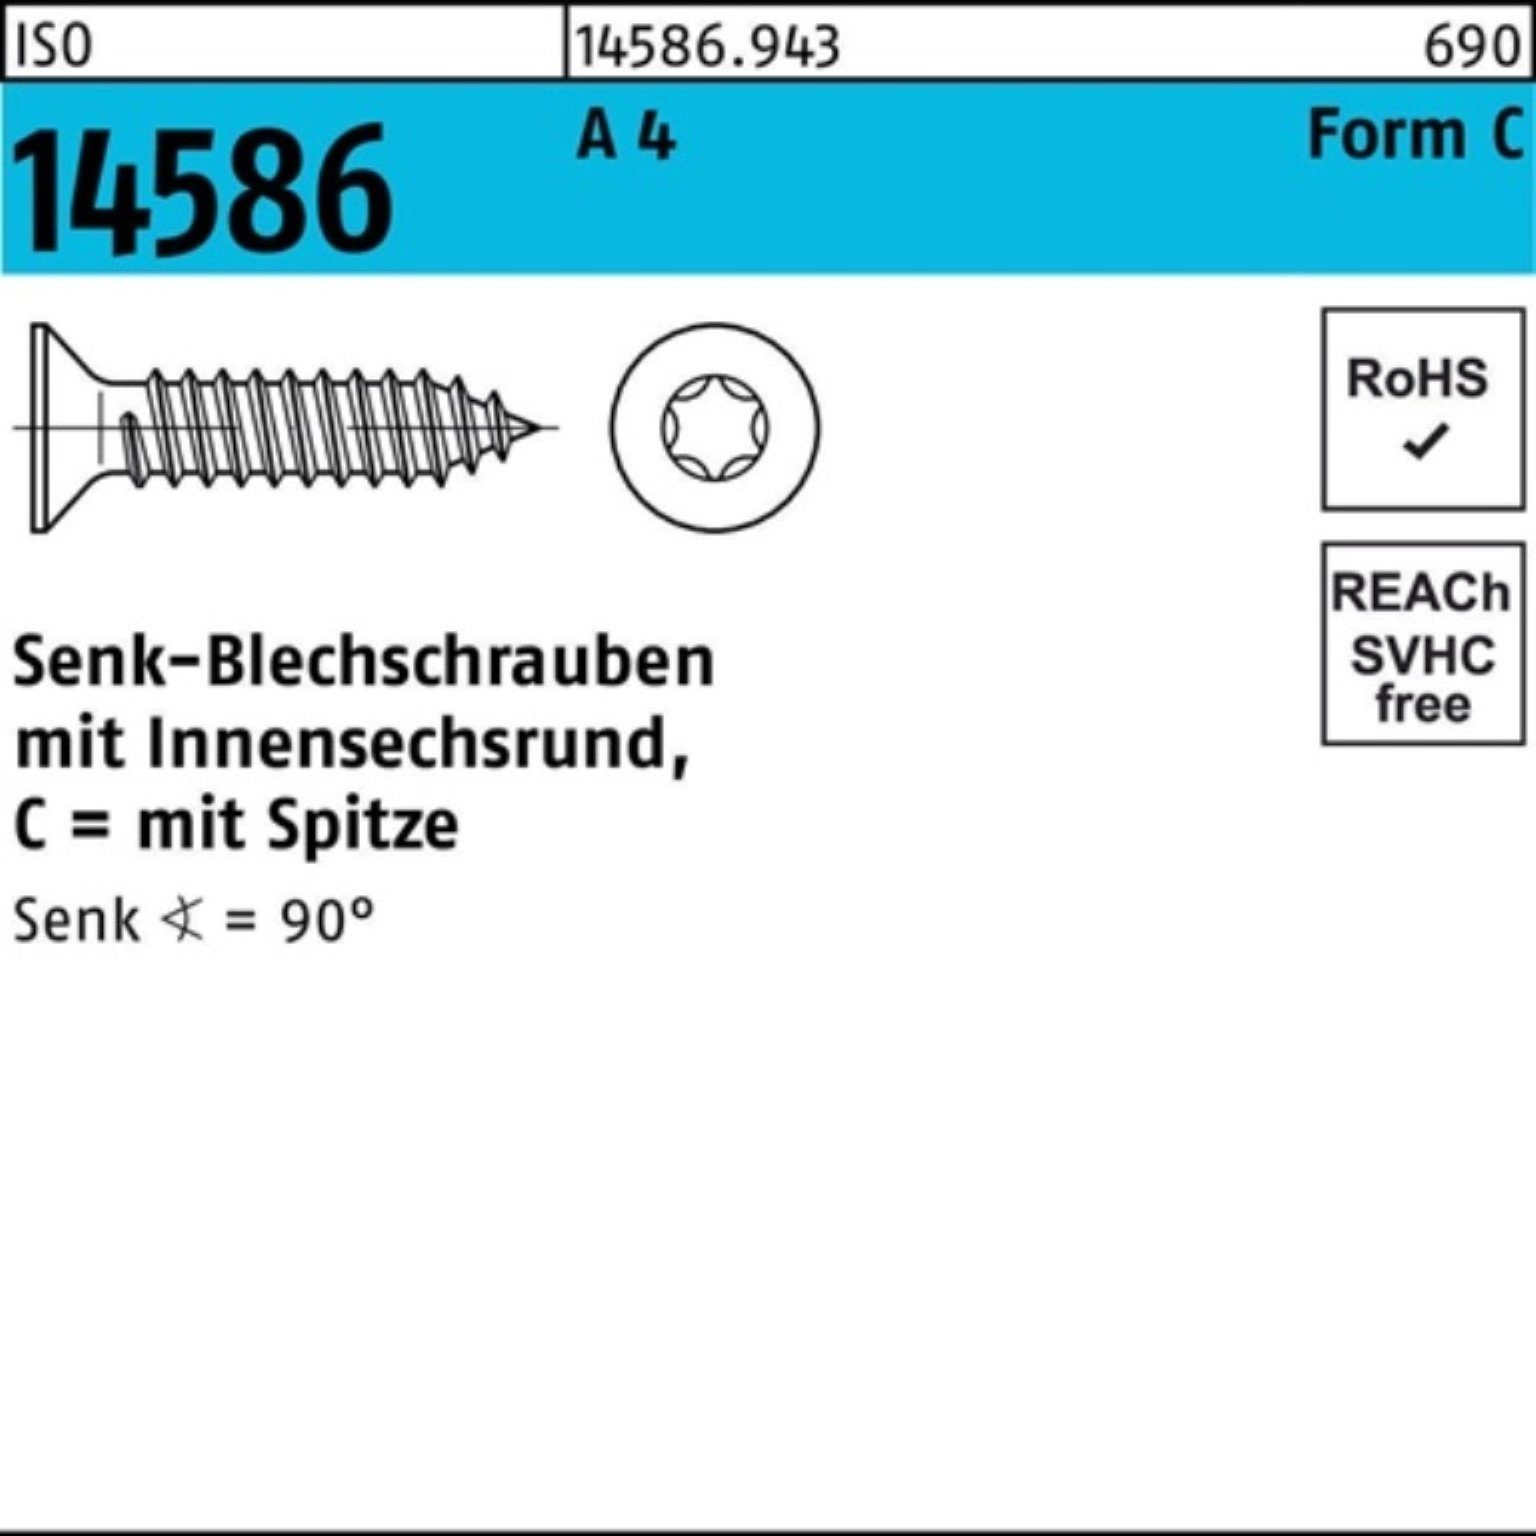 Reyher Schraube 250er Pack Senkblechschraube ISO 14586 ISR/Spitze 5,5x 70-T25 A 4 250 | Schrauben